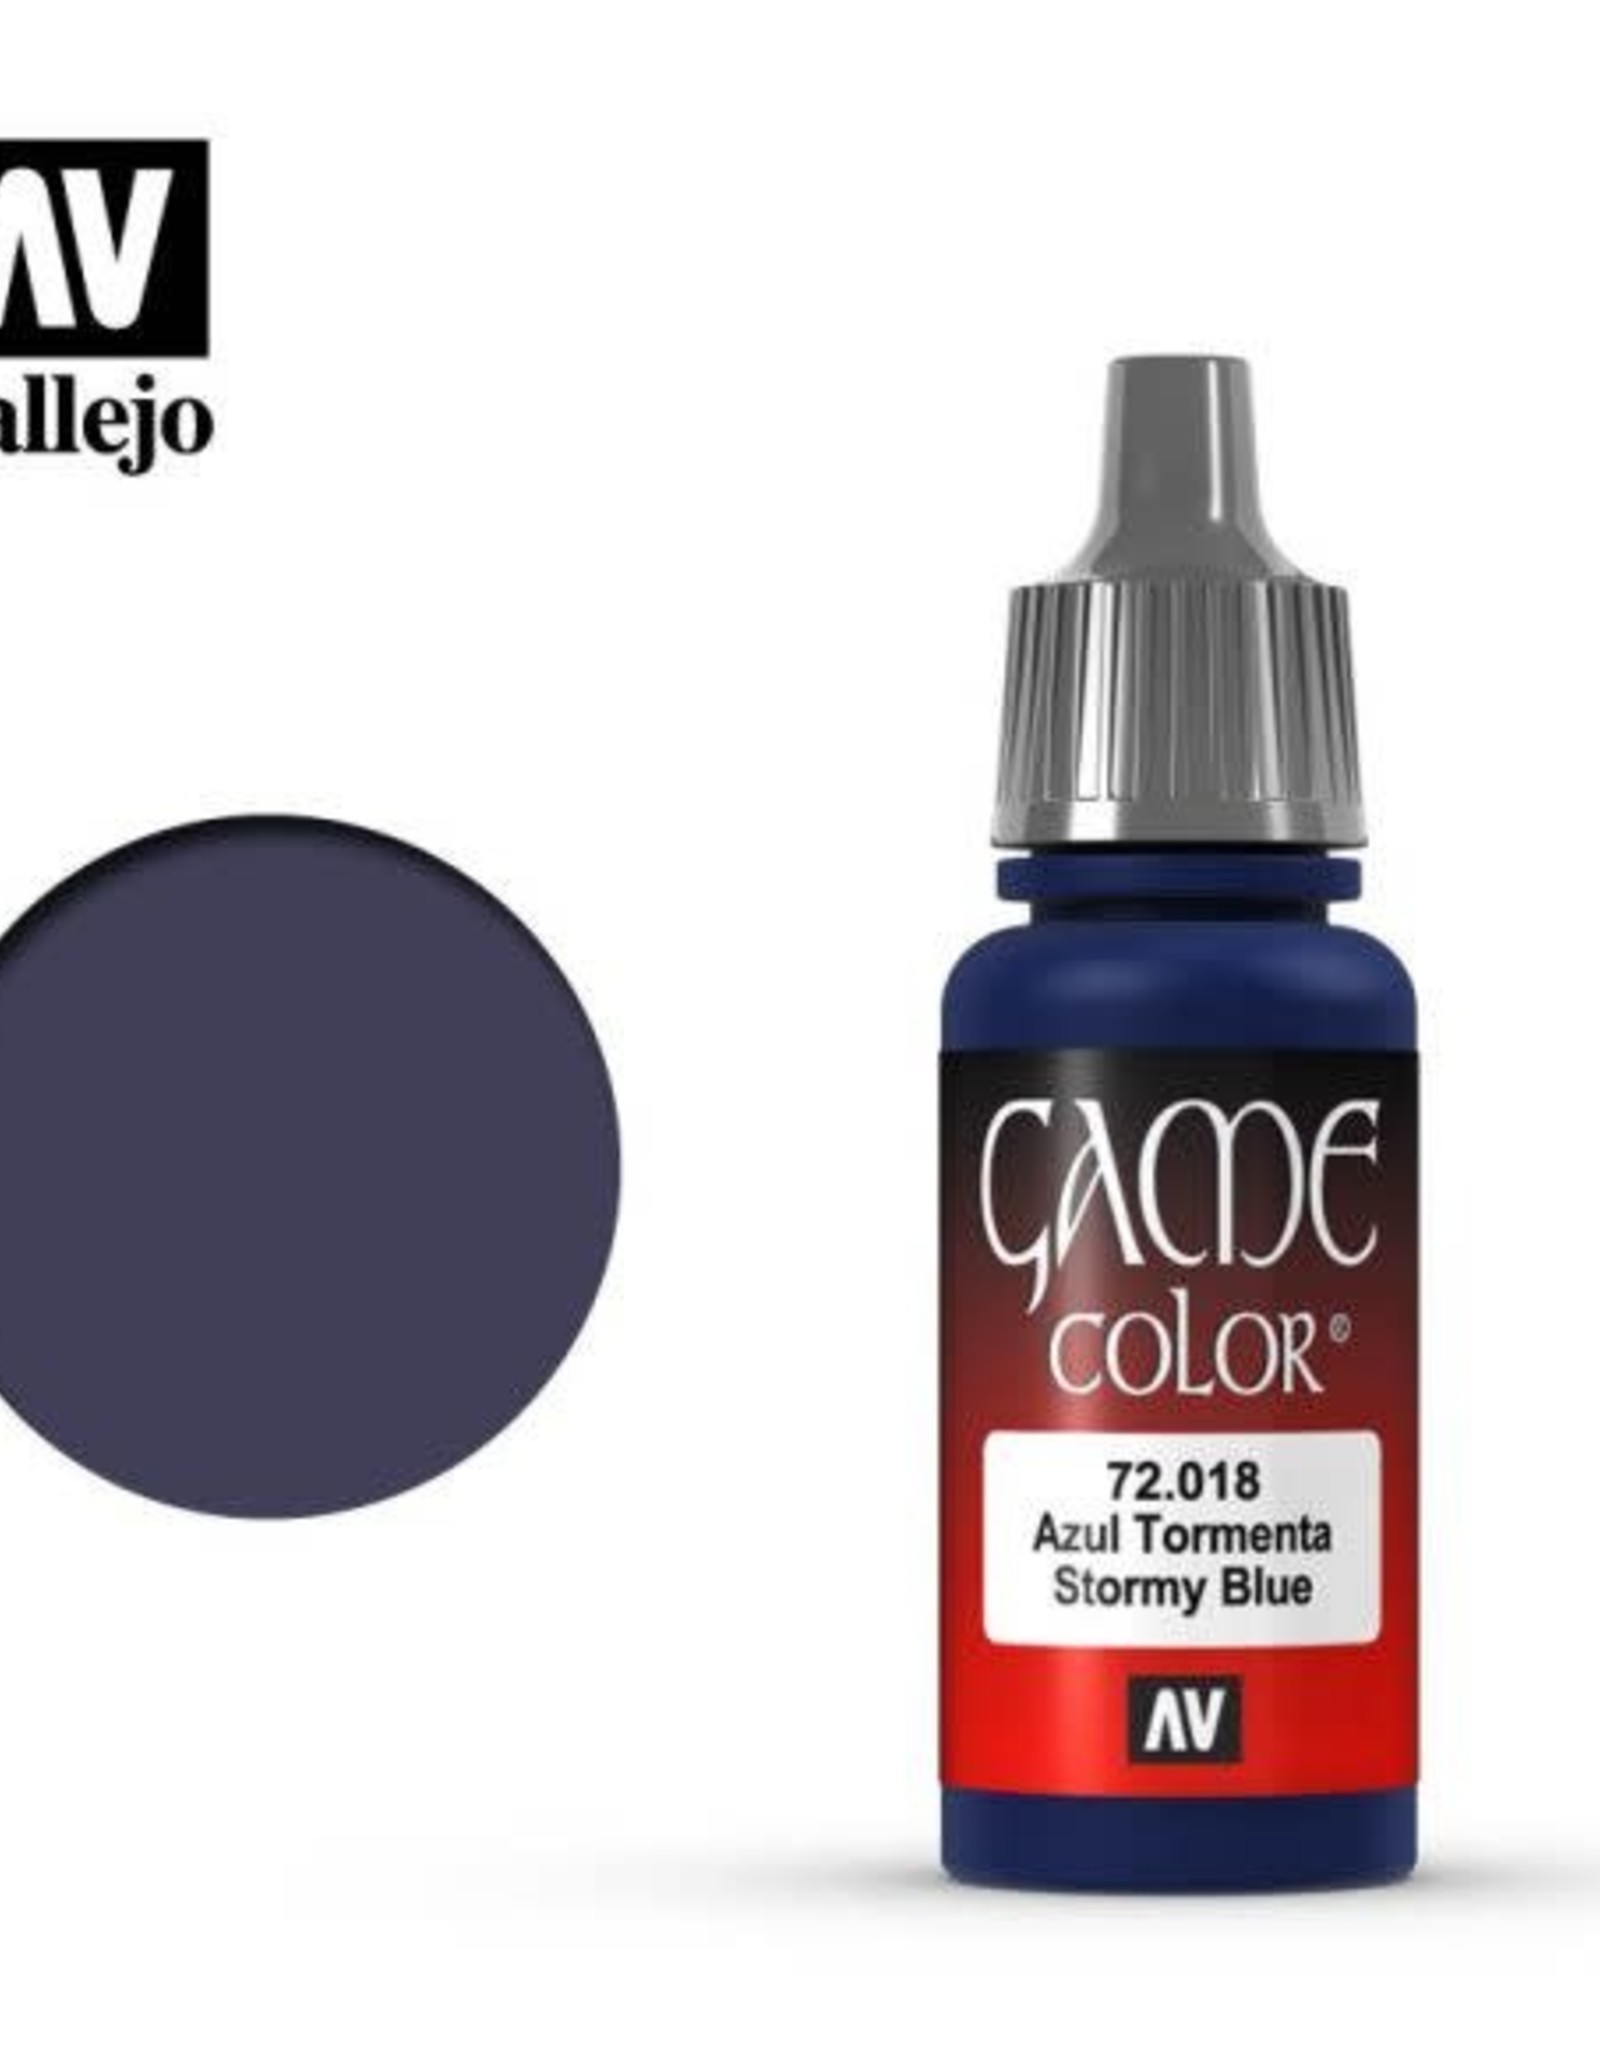 Acrylicos Vallejo AV GC: Stormy Blue 72.018 (17 ml)